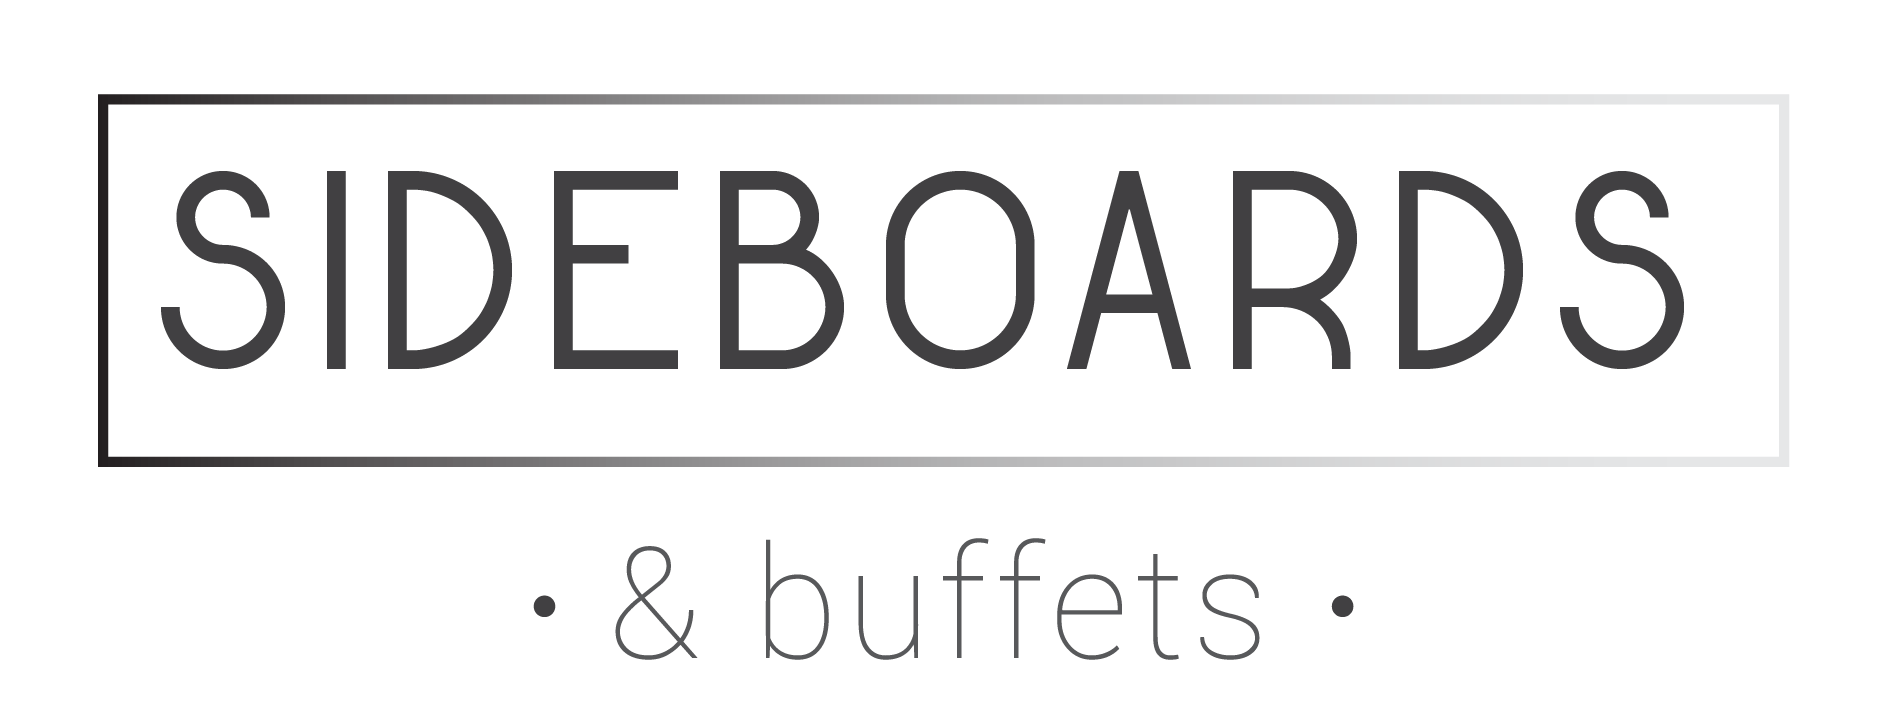 Sideboards & Buffets